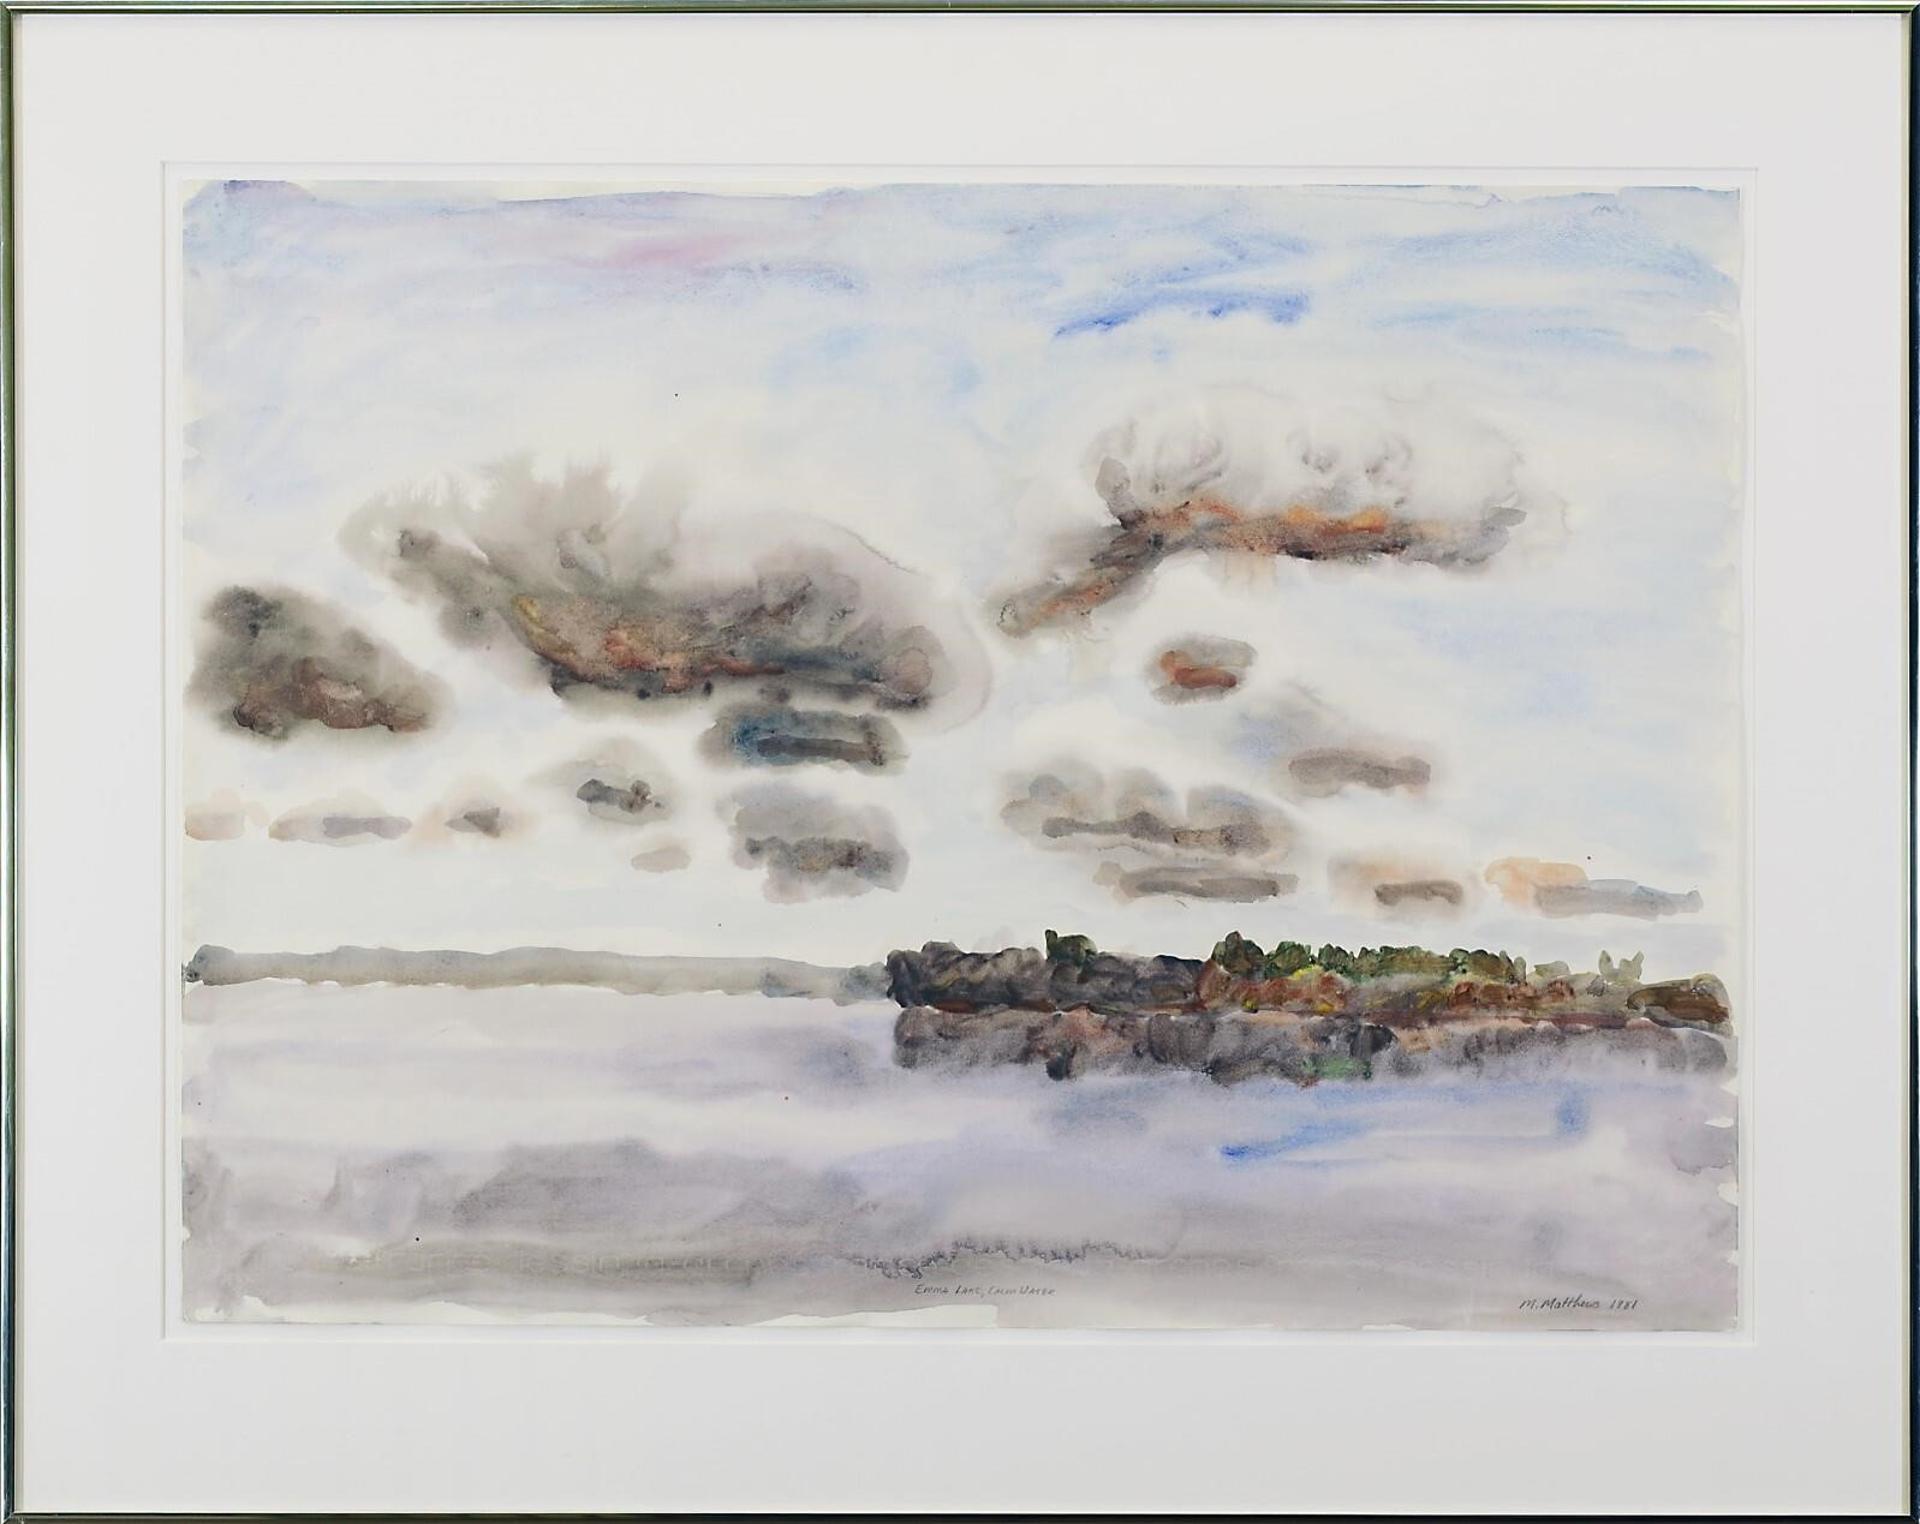 Michael Matthews (1954) - Emma Lake, Calm Water